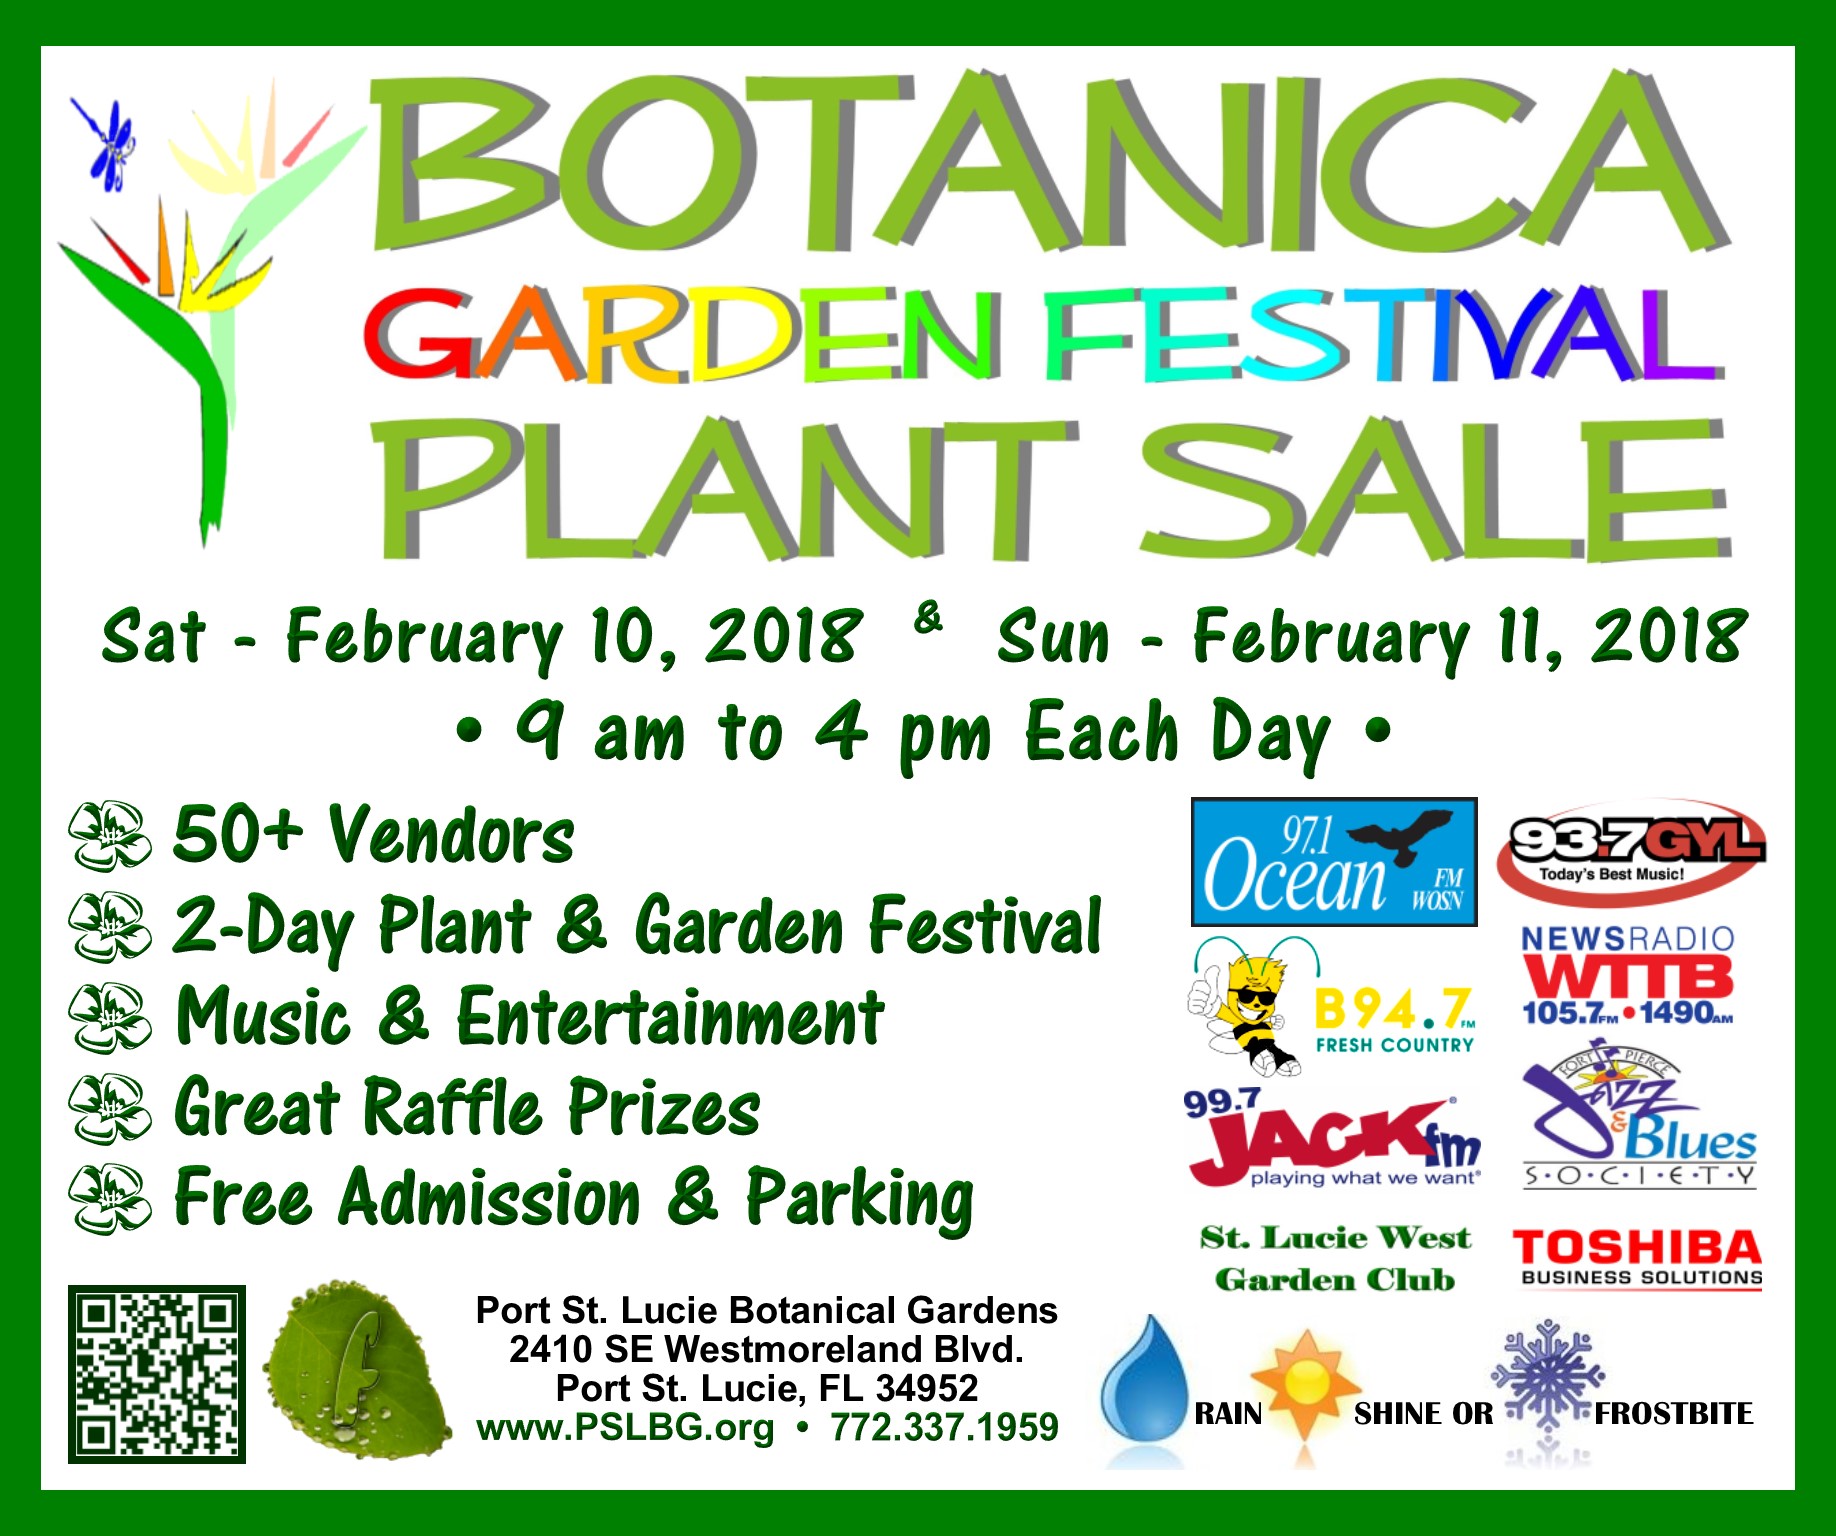 Botanica Garden Festival Plant Sale 2